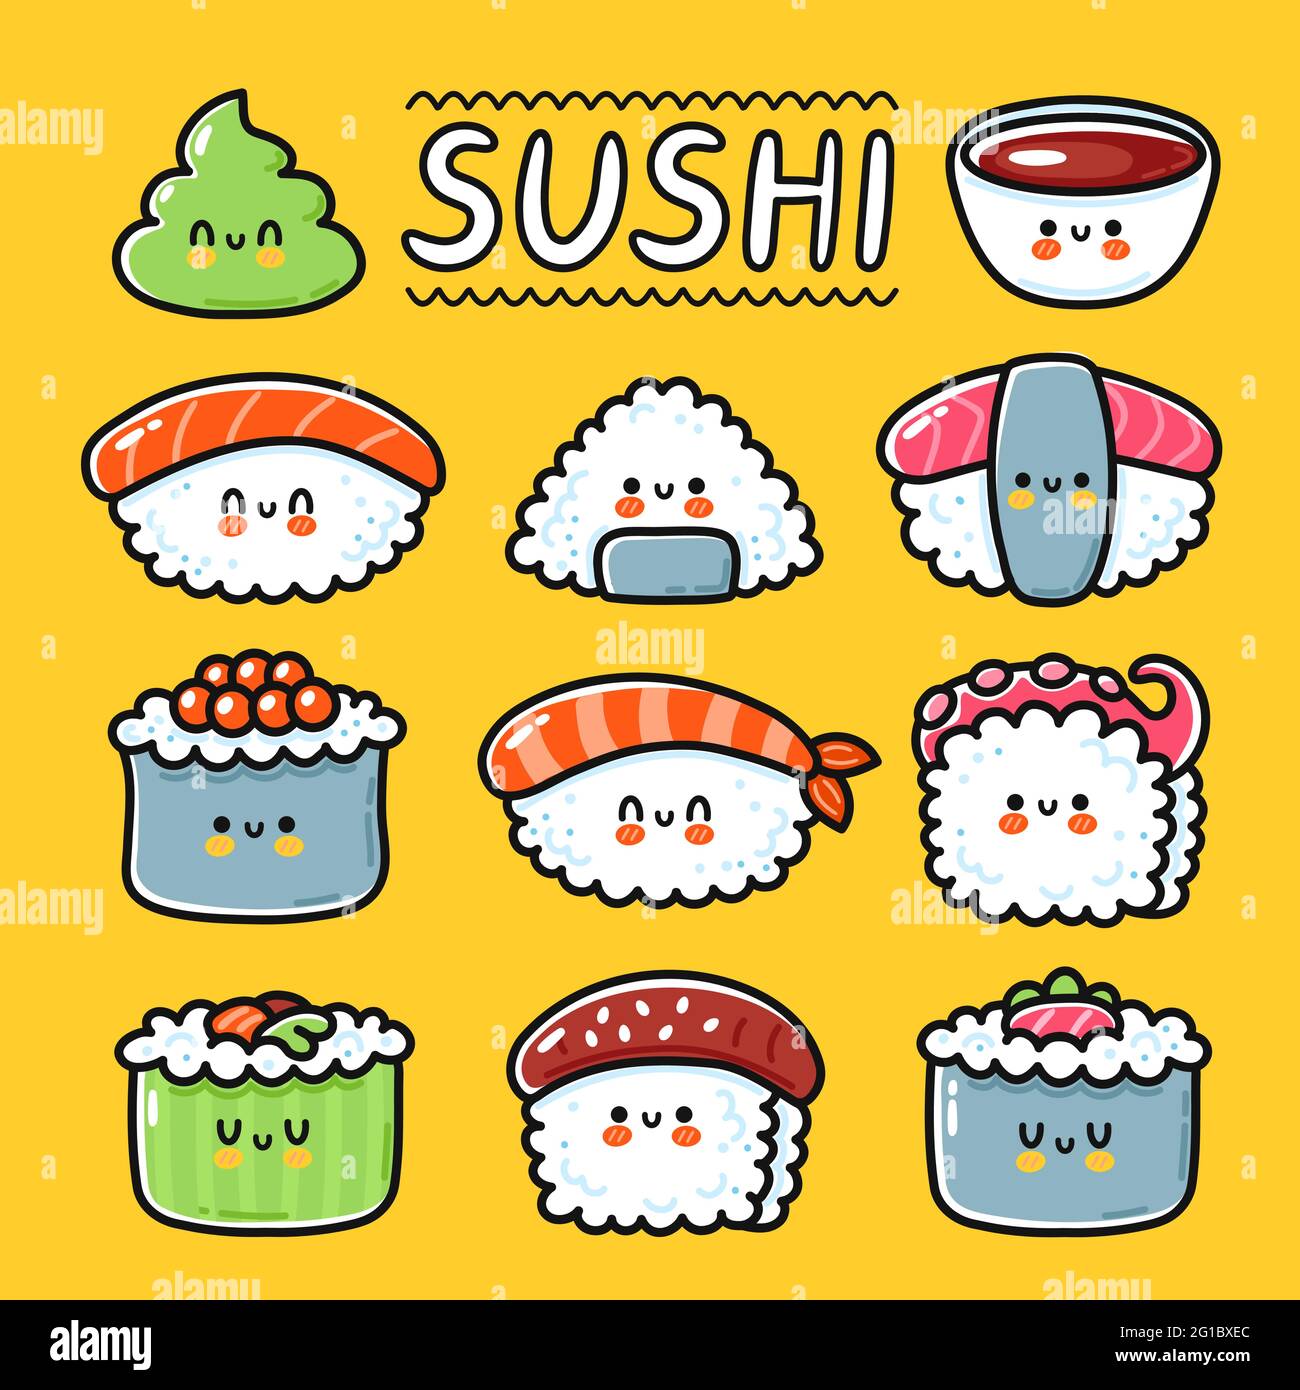 Cute funny happy sushi, maki, rolls cartoon character set collection. Vector hand drawn line kawaii character illustration icon. Cartoon kawaii cute sushi, asian food restaurant menu concept Stock Vector